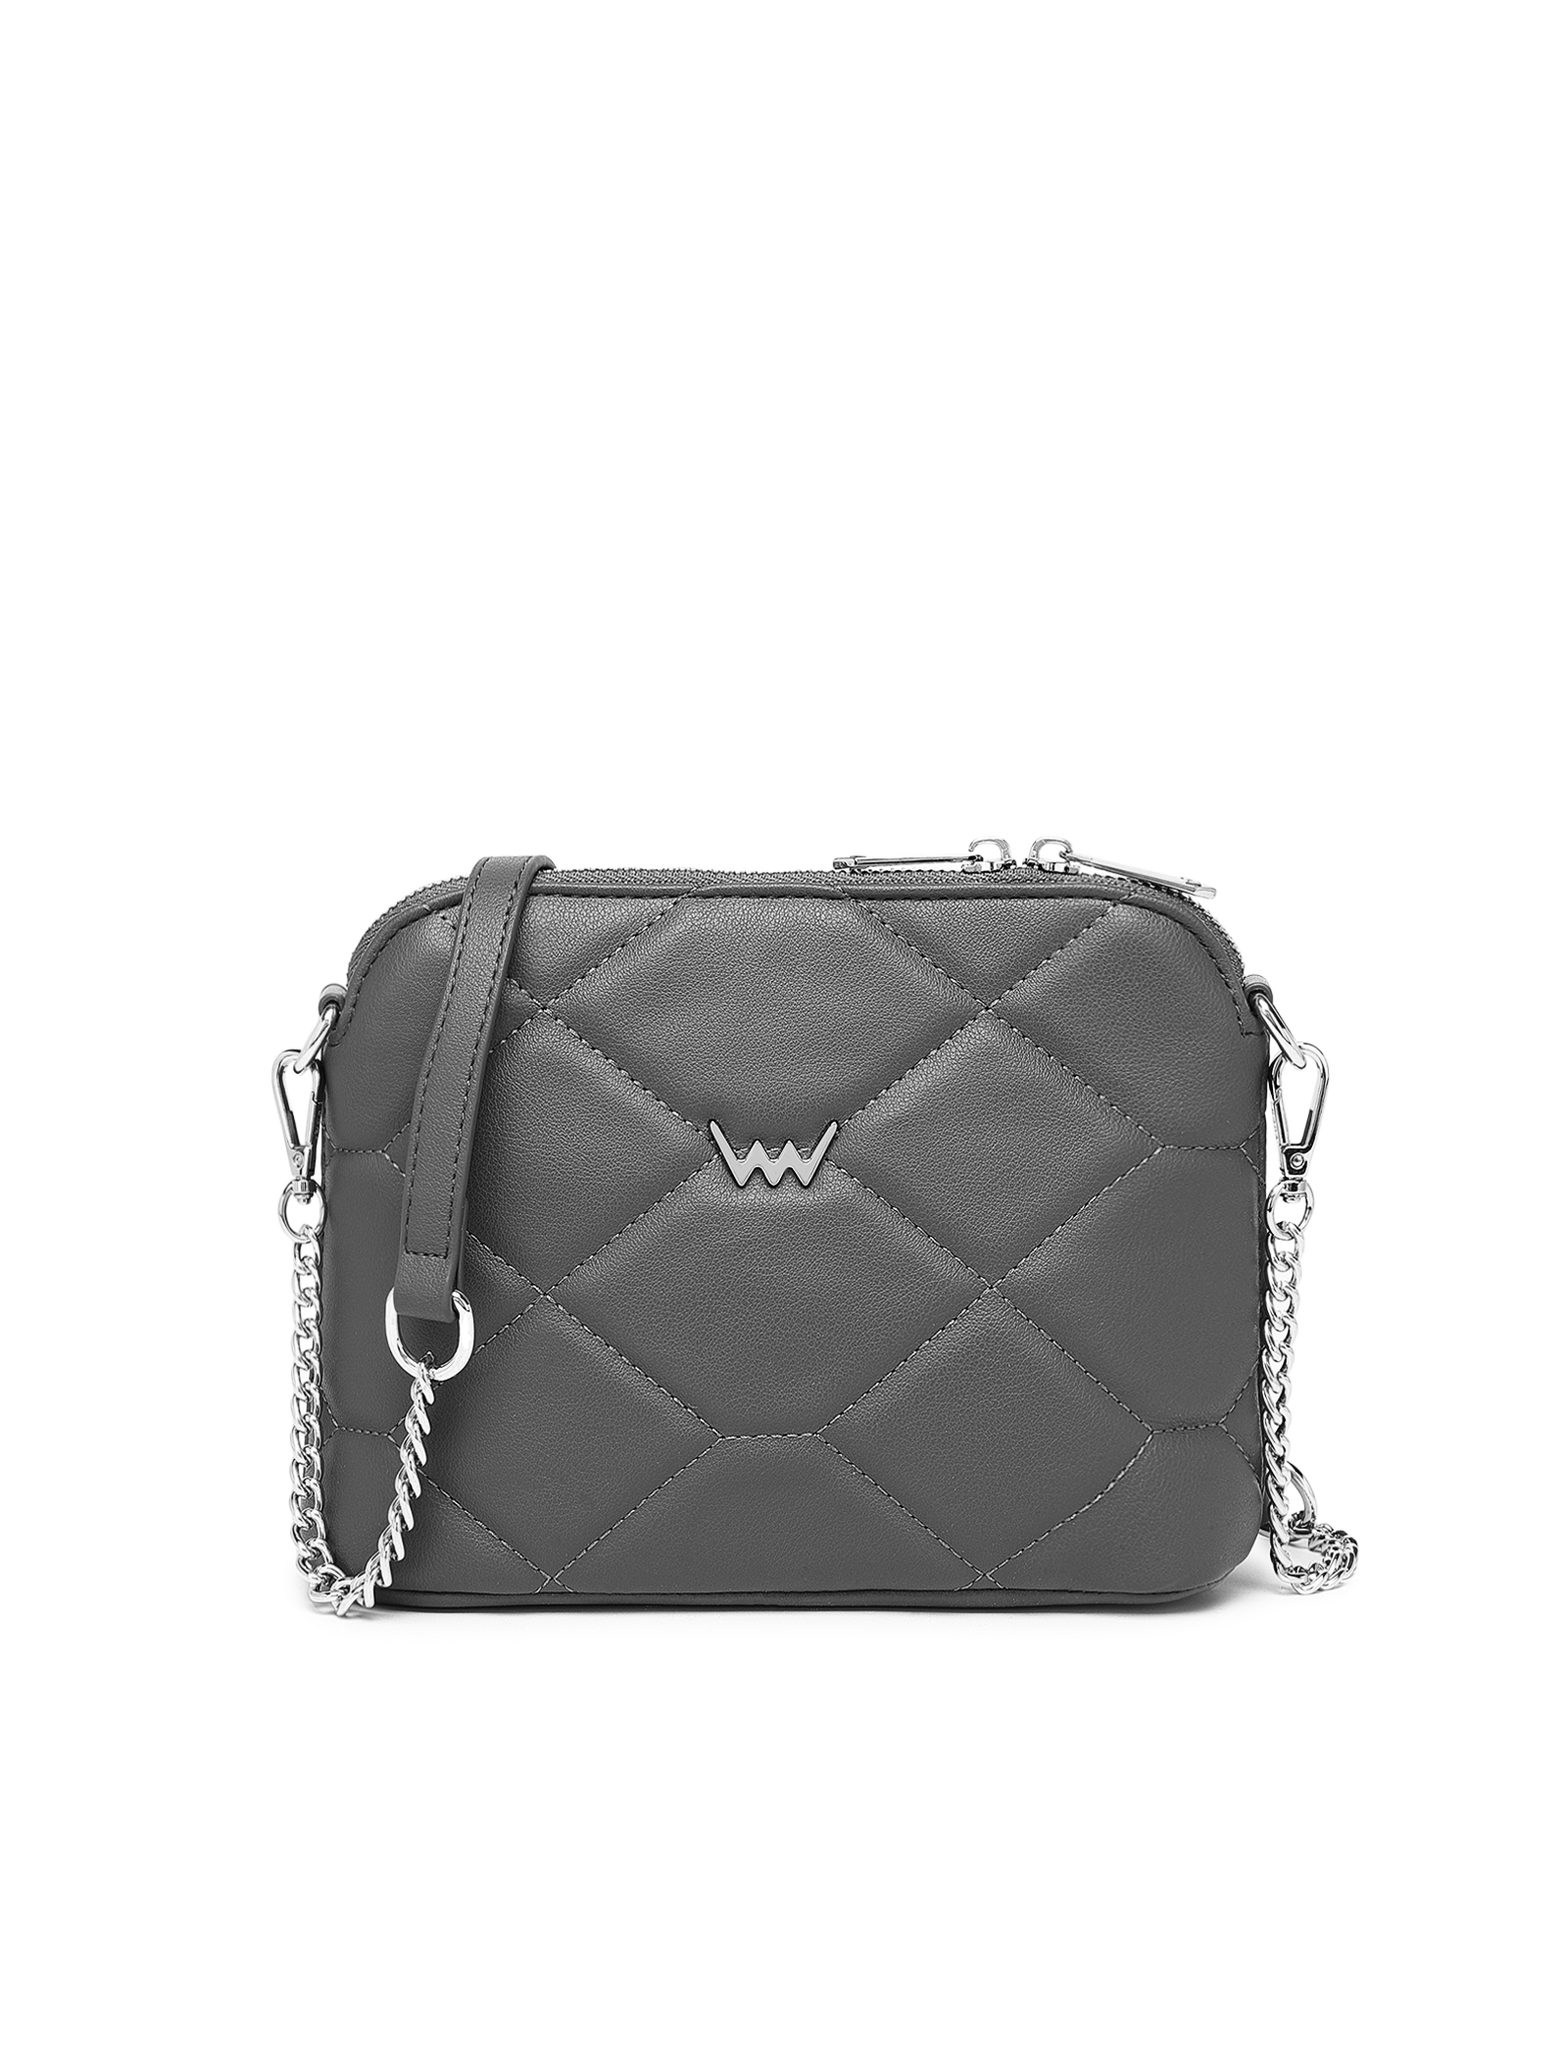 Handbag VUCH Luliane Grey